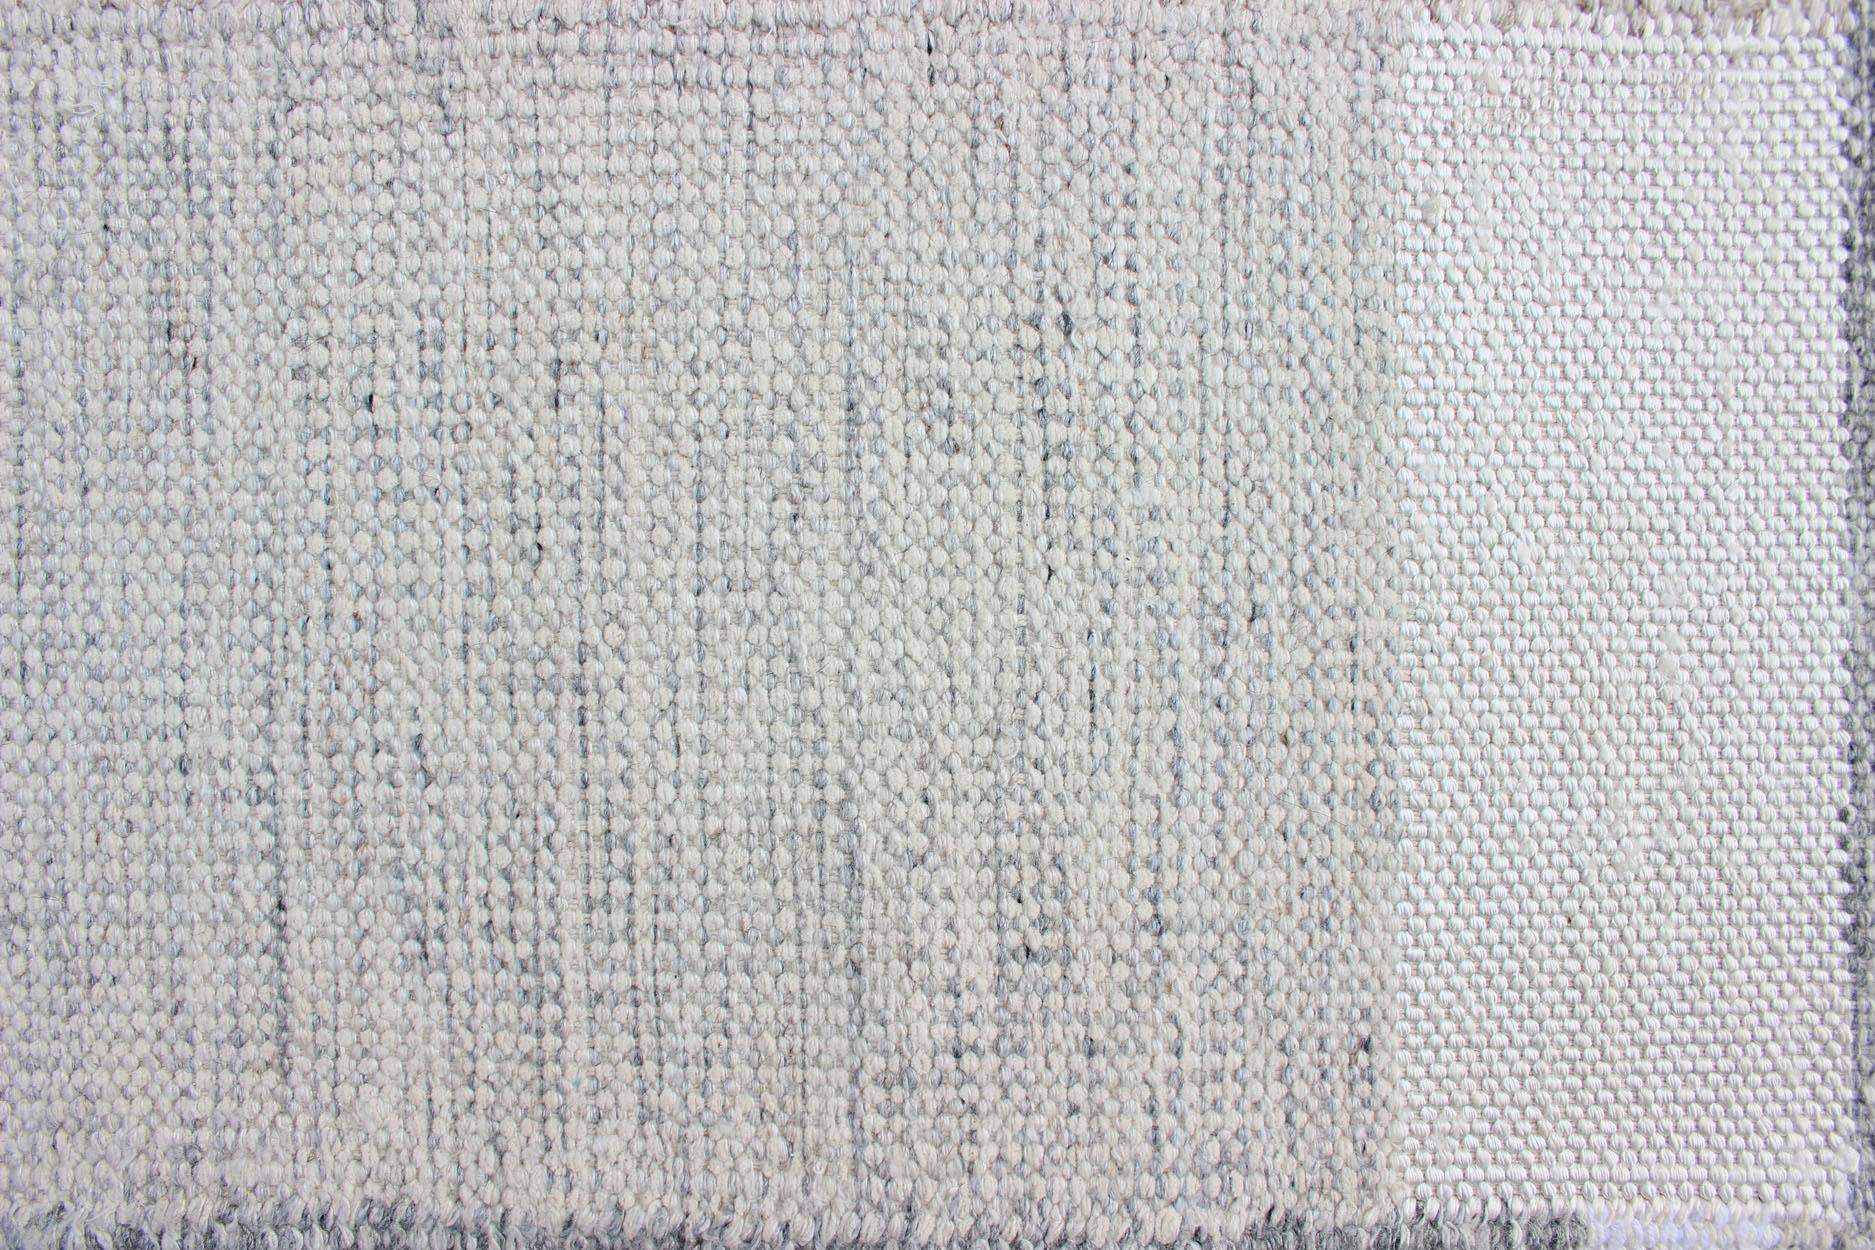 Modern Scandinavian Flat-Weave Rug Design in Gray, beige, Creams & White Tones For Sale 5